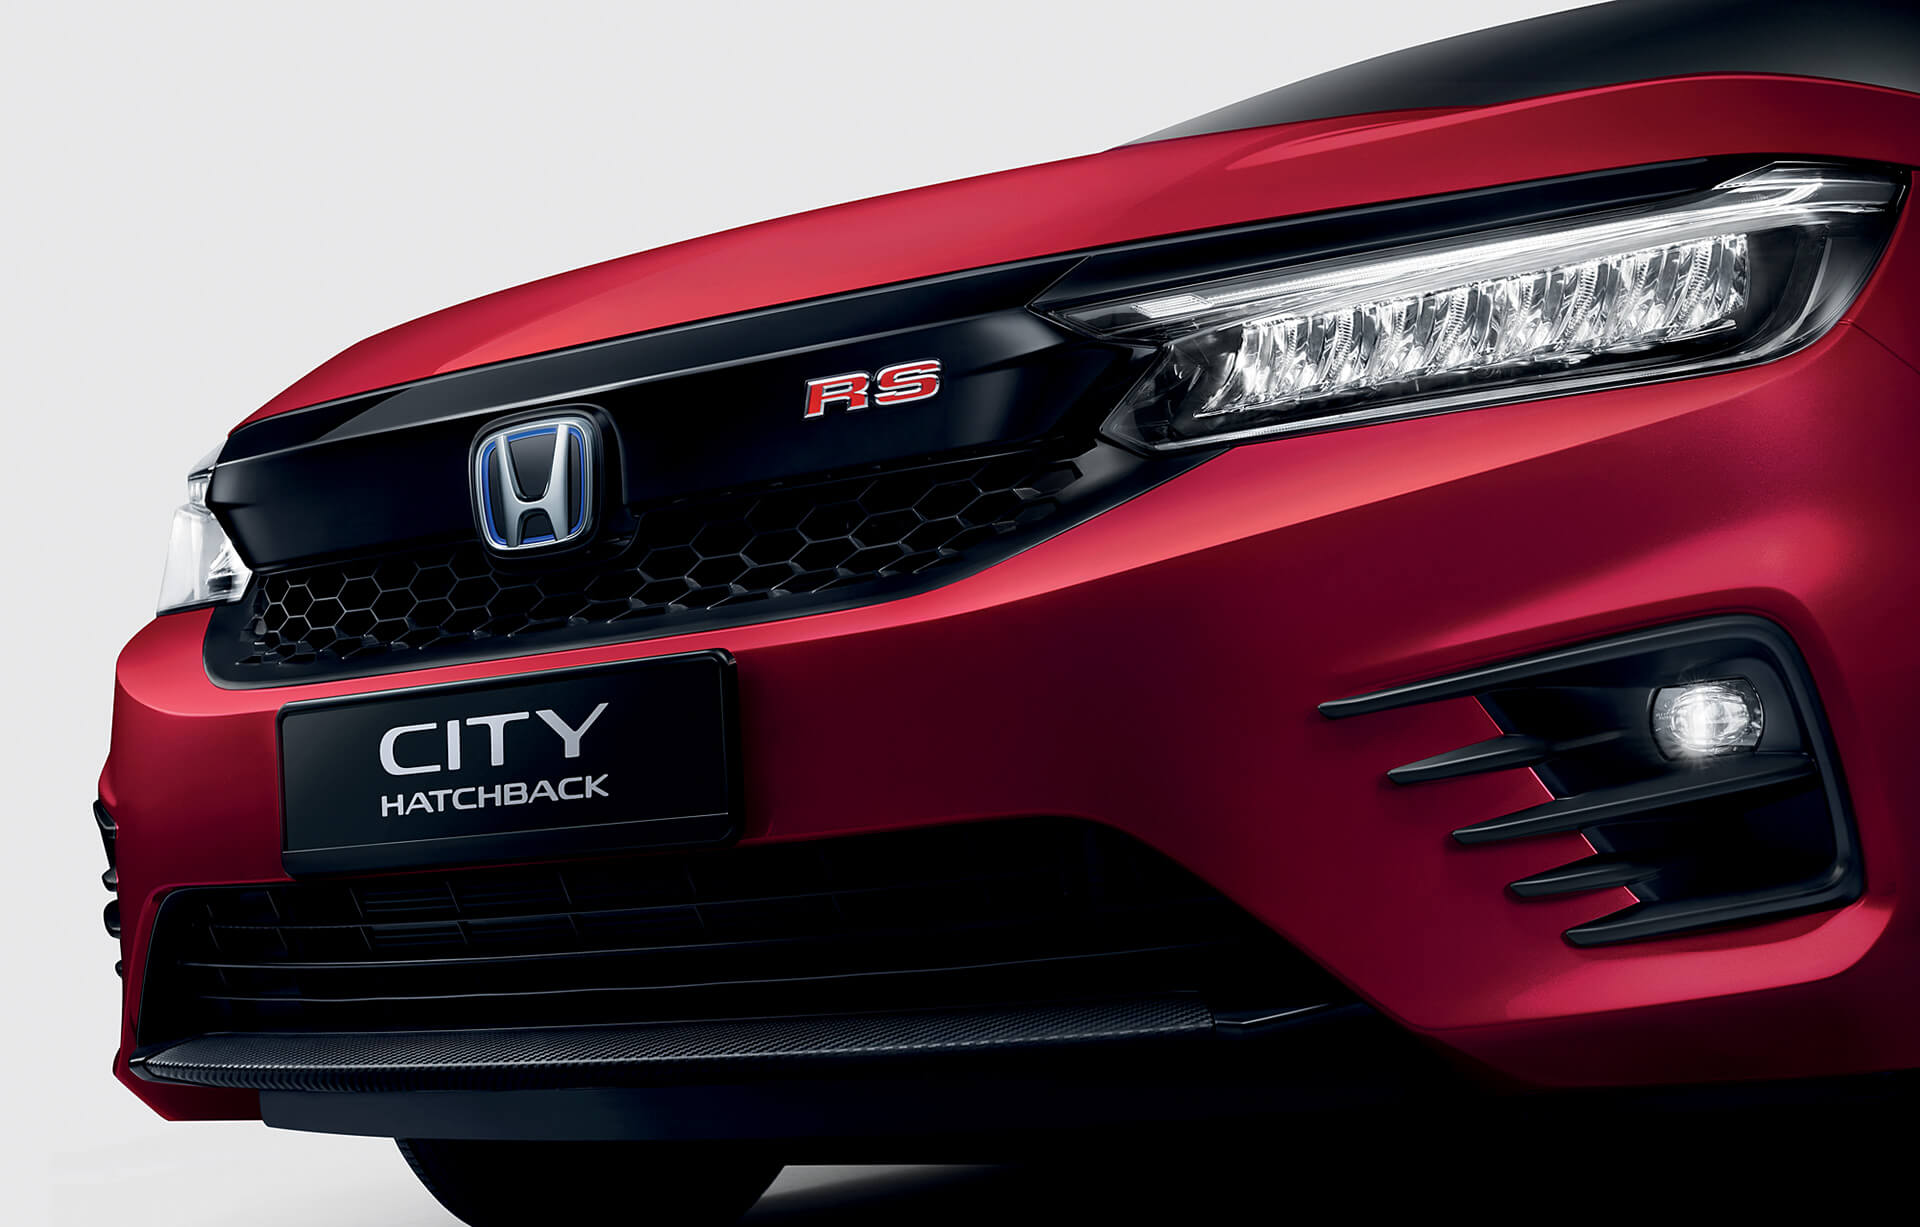 Honda city hatchback spec